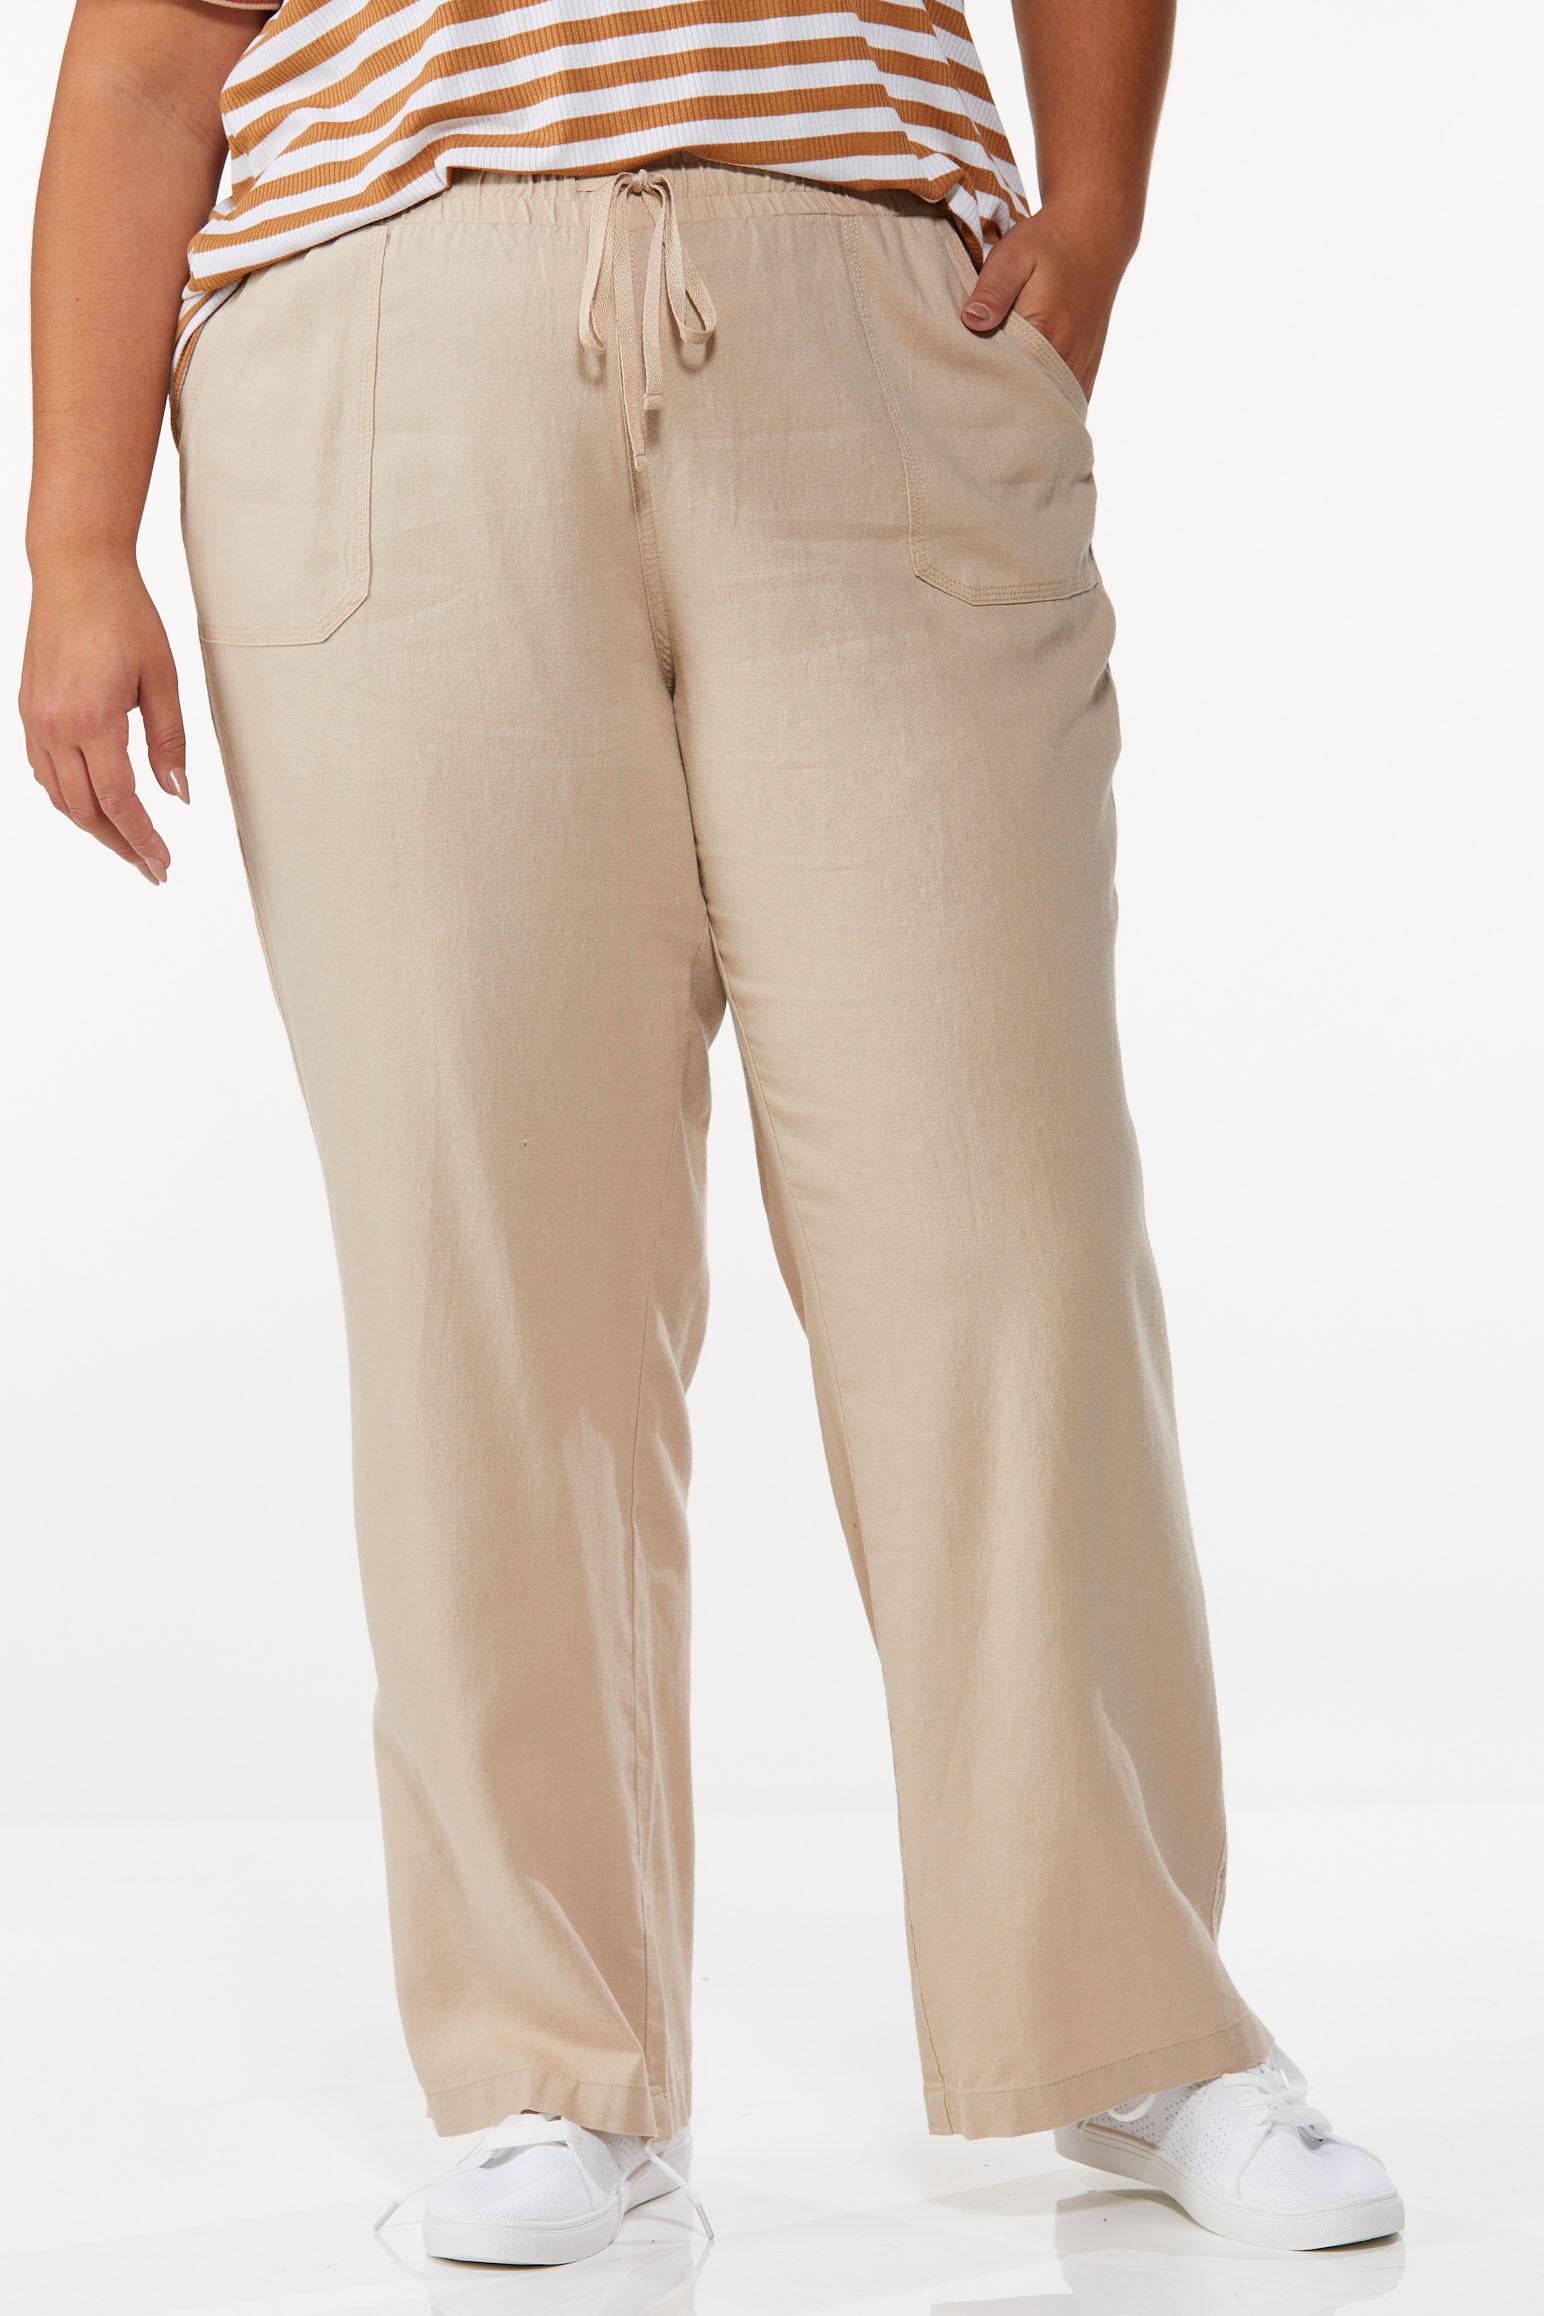 Bedre Vejfremstillingsproces vogn Plus Size Drawstring Linen Pants Pants Cato Fashions